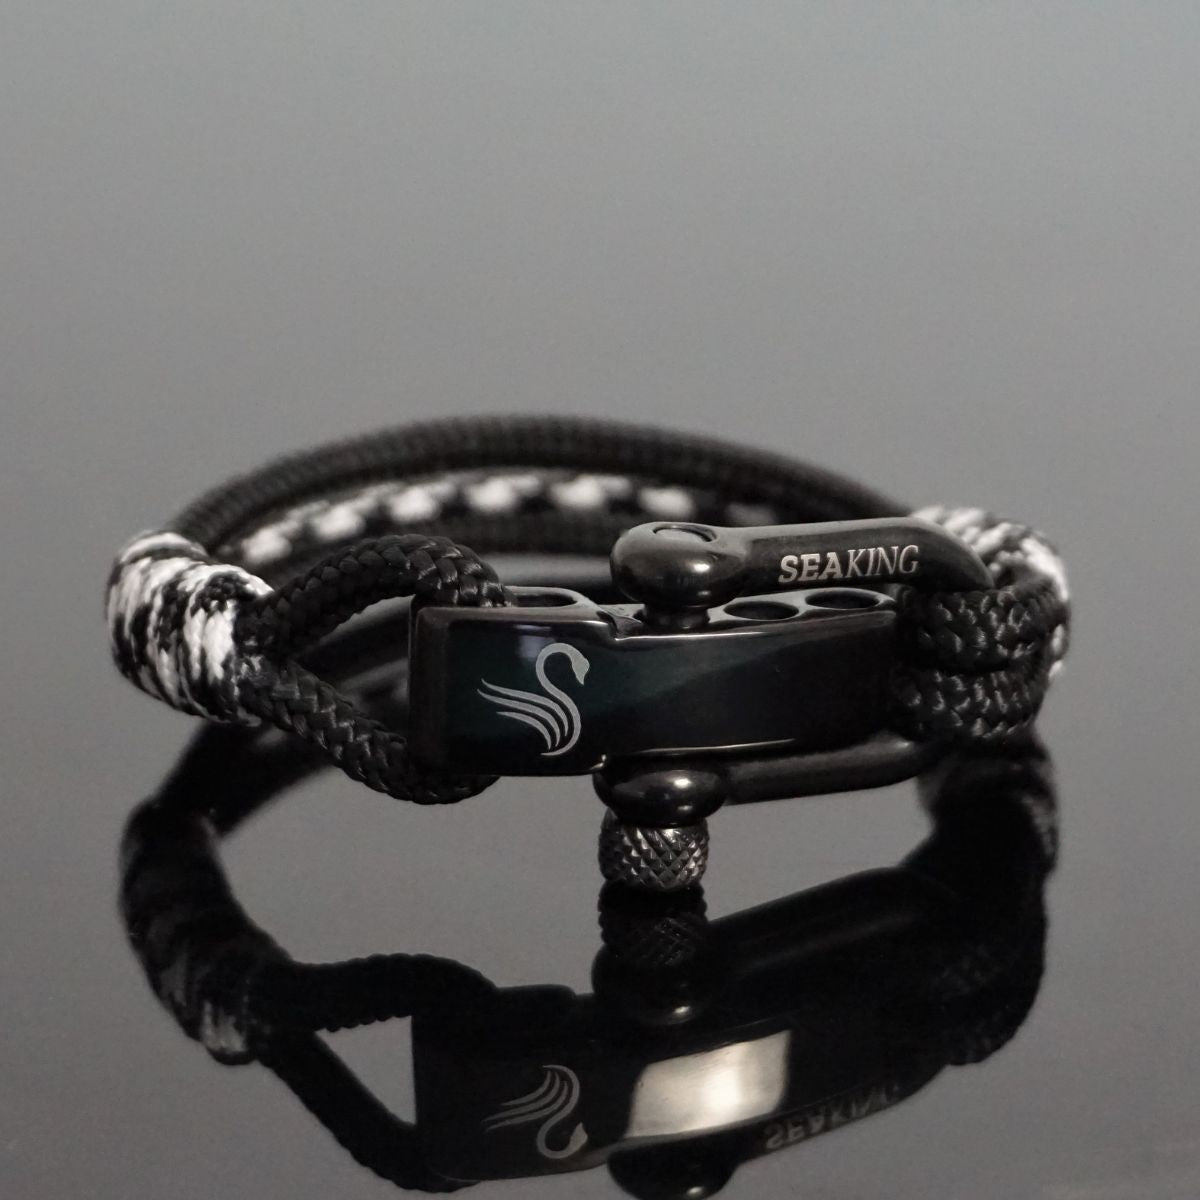 Mondsee - Zorro - Sea King Bracelets